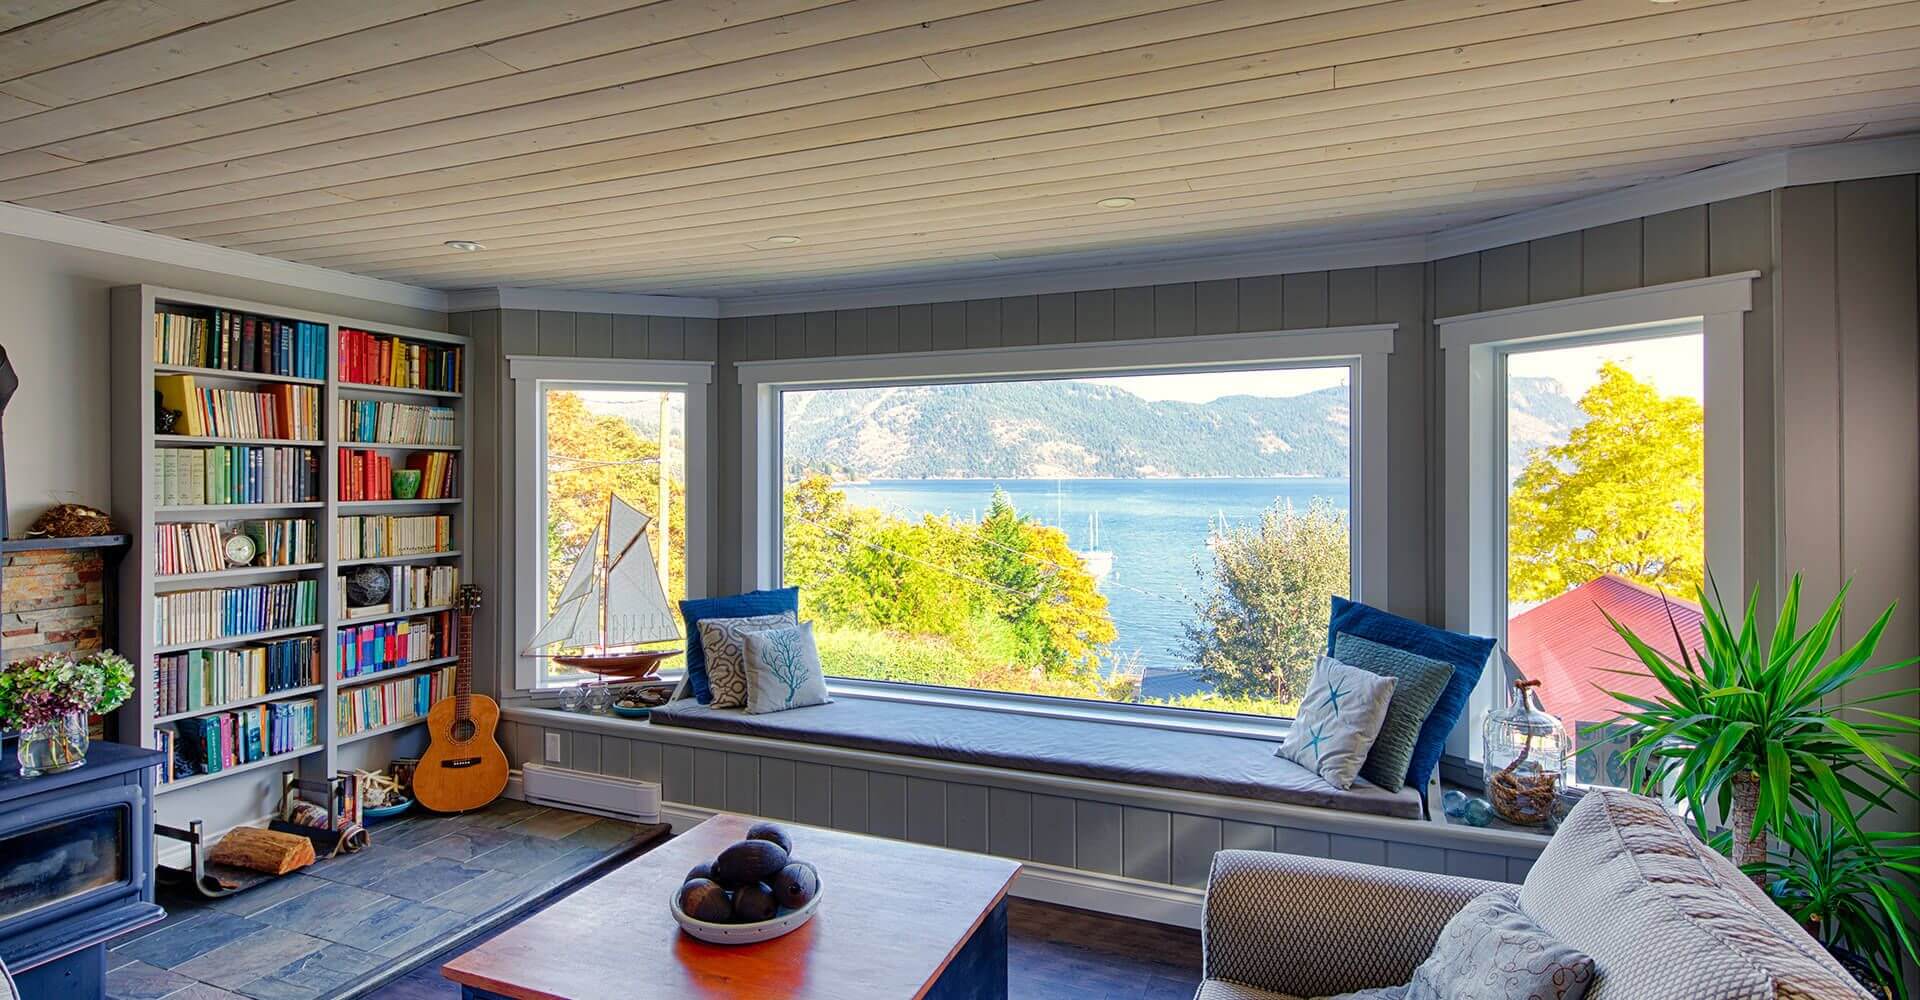 Thermoproof Windows & Doors - Interior Bay Window Views Lifetime Warranty